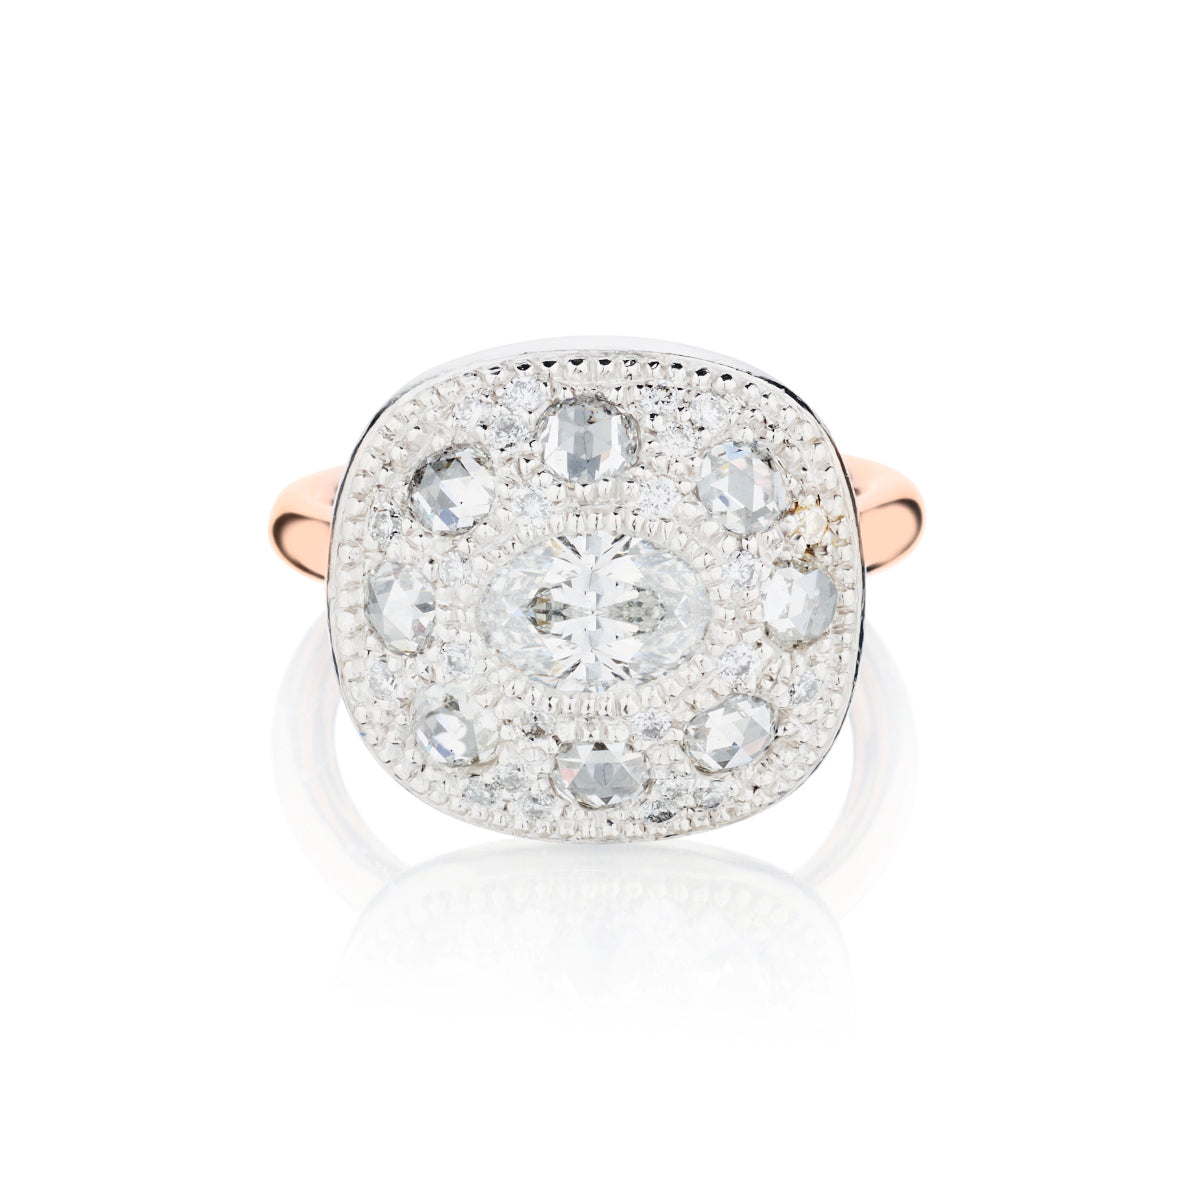 Vintage Inspired Diamond Ring in Platinum. Shank 18kt Rose Gold